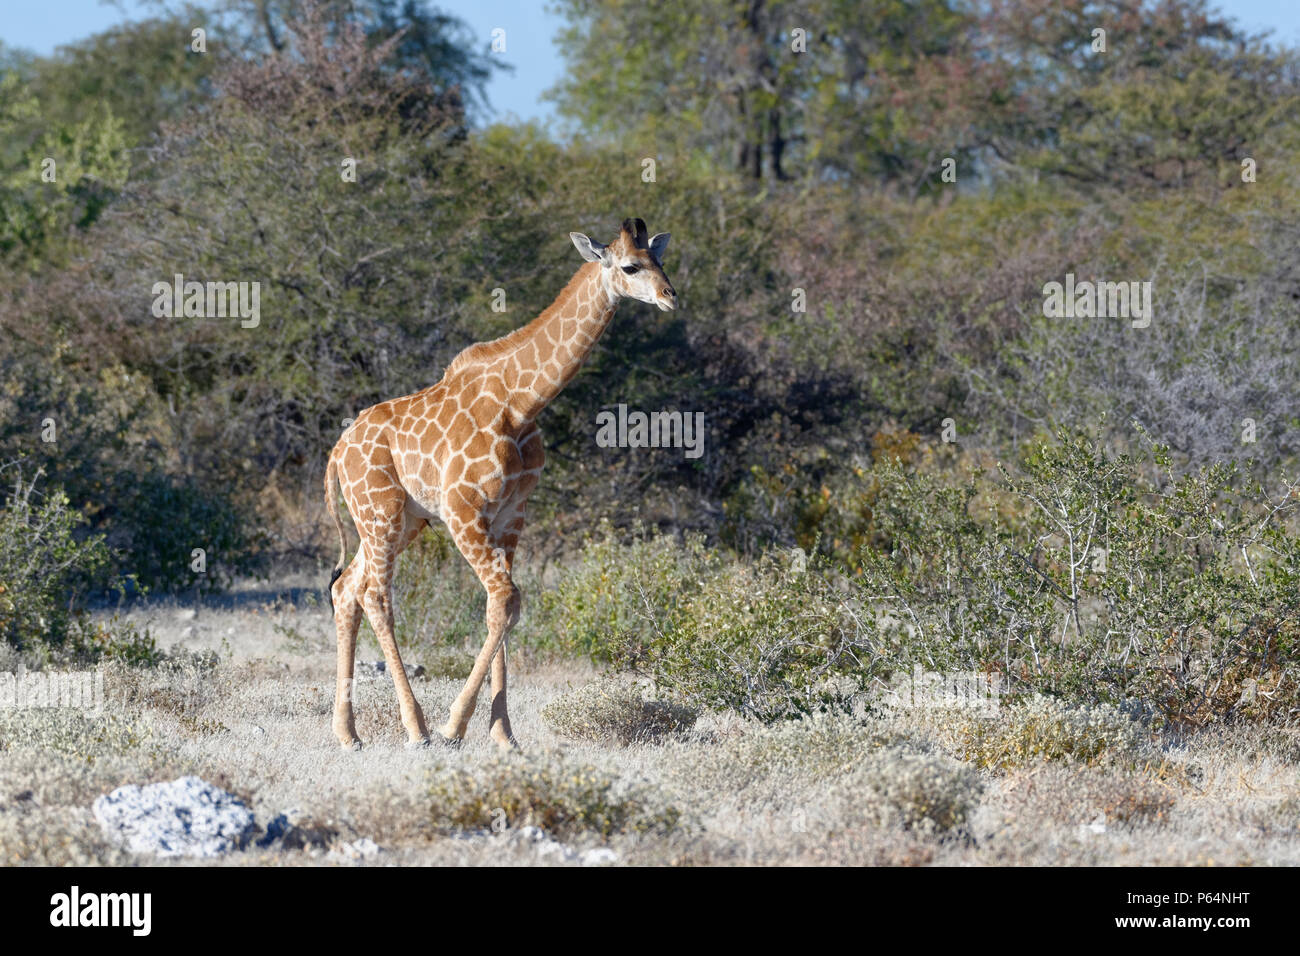 Namibian giraffe or Angolan giraffe (Giraffa camelopardalis angolensis), young animal walking, Etosha National Park, Namibia, Africa Stock Photo